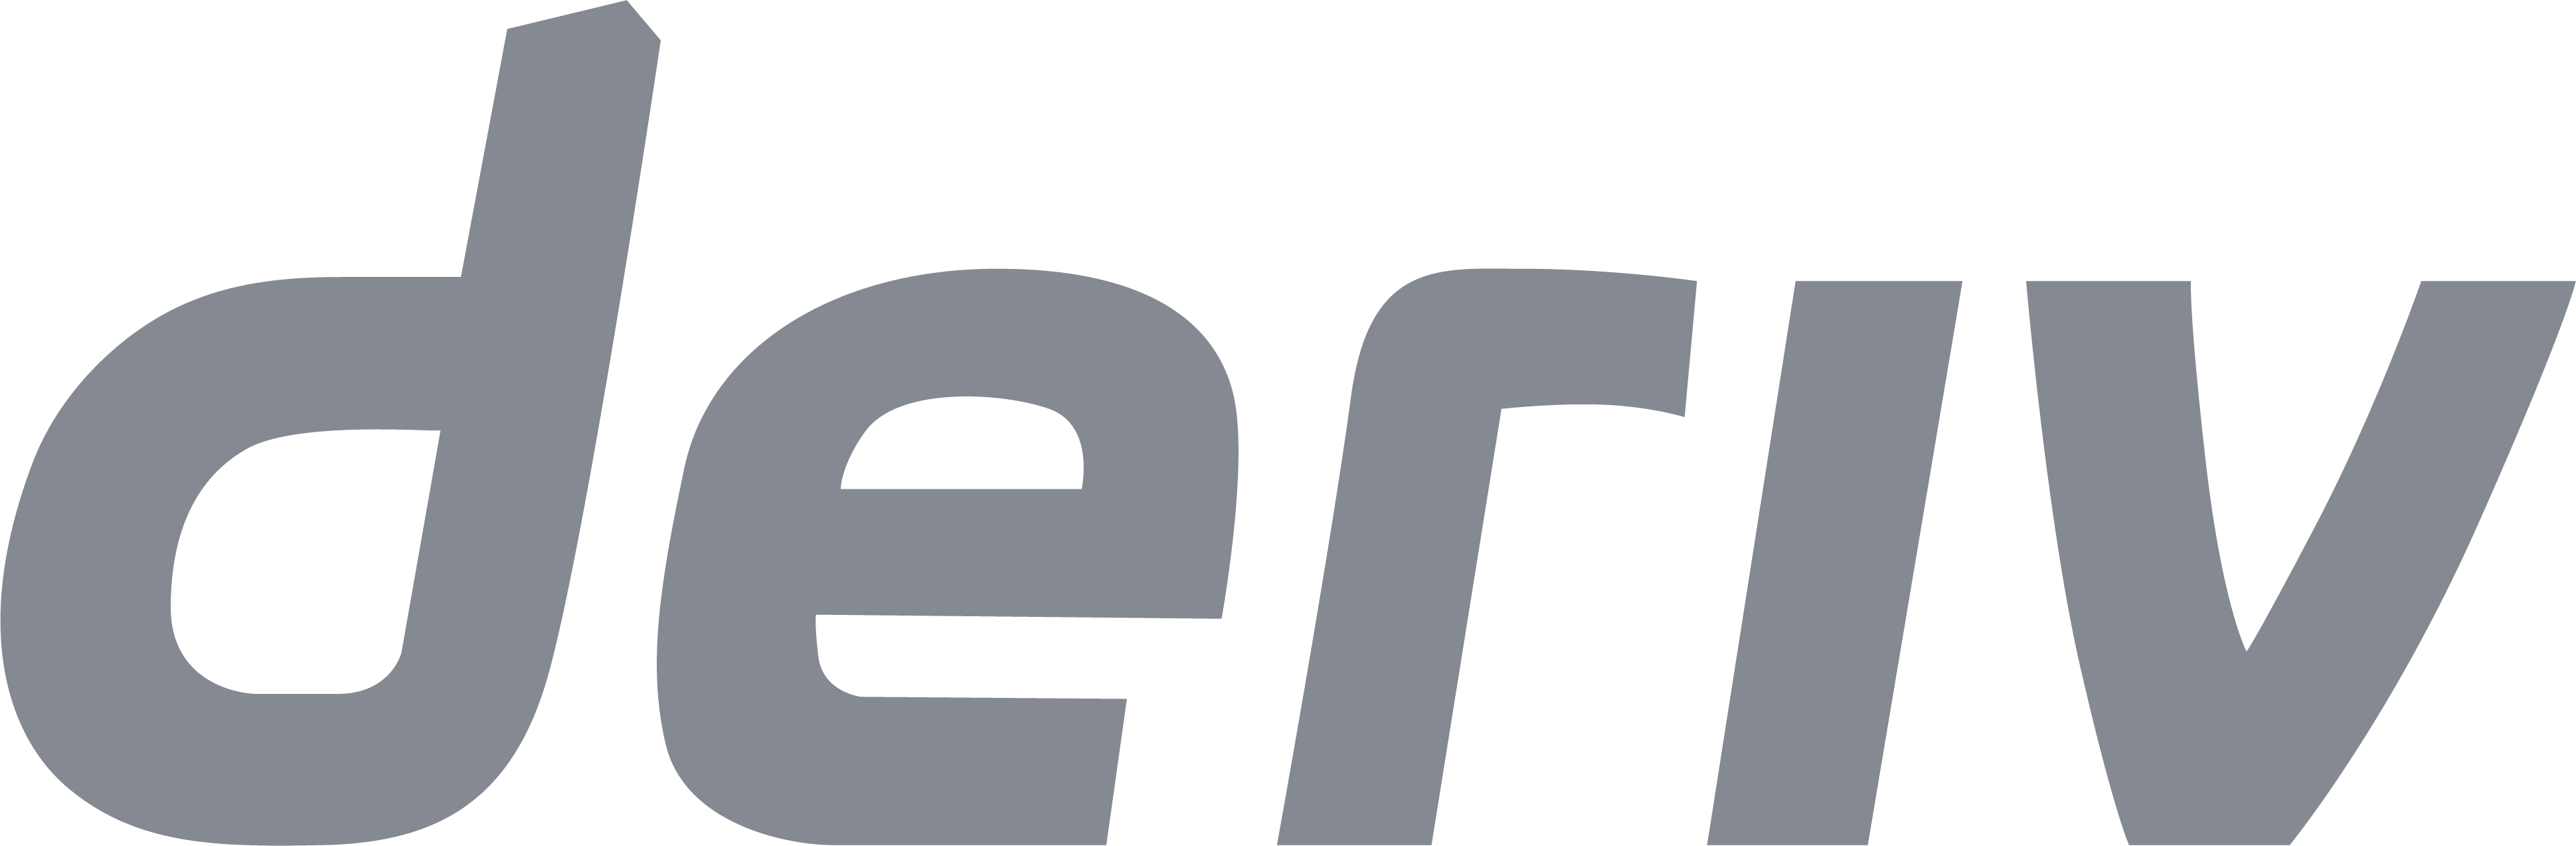 Deriv Light Grey Logo